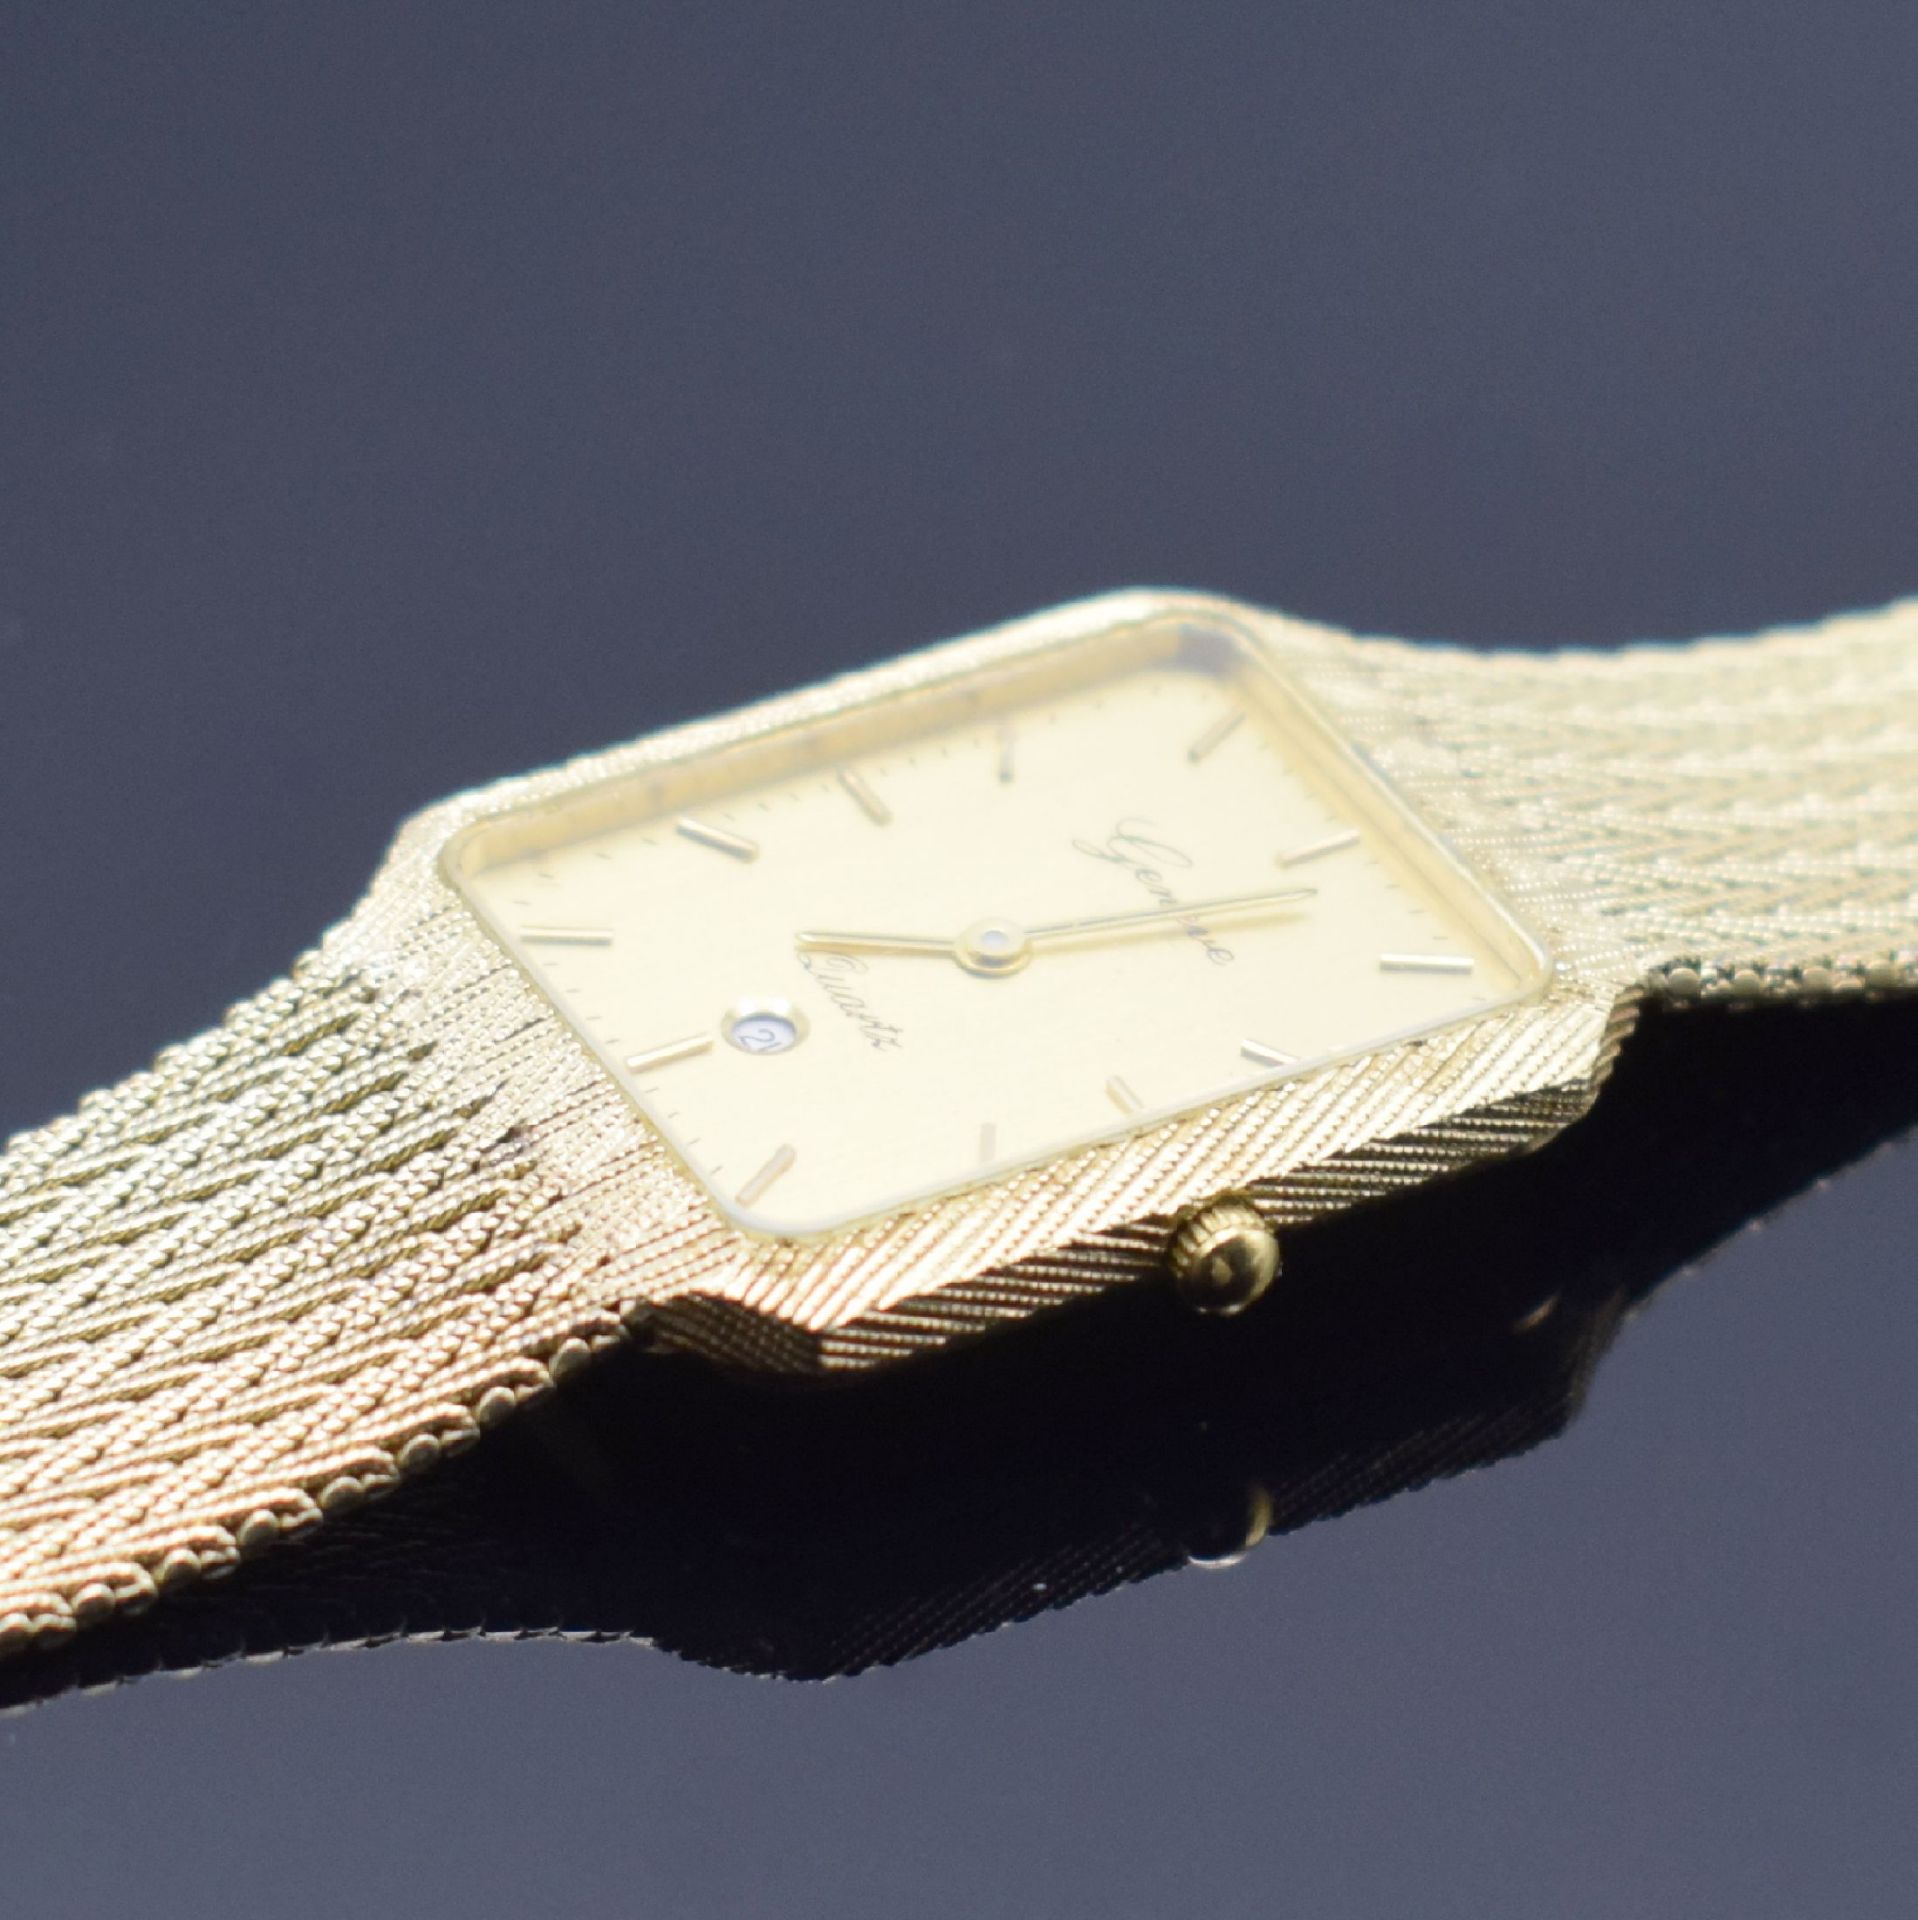 GENEVE Armbanduhr in GG 585/000, Schweiz um 1980, quarz, - Bild 4 aus 5